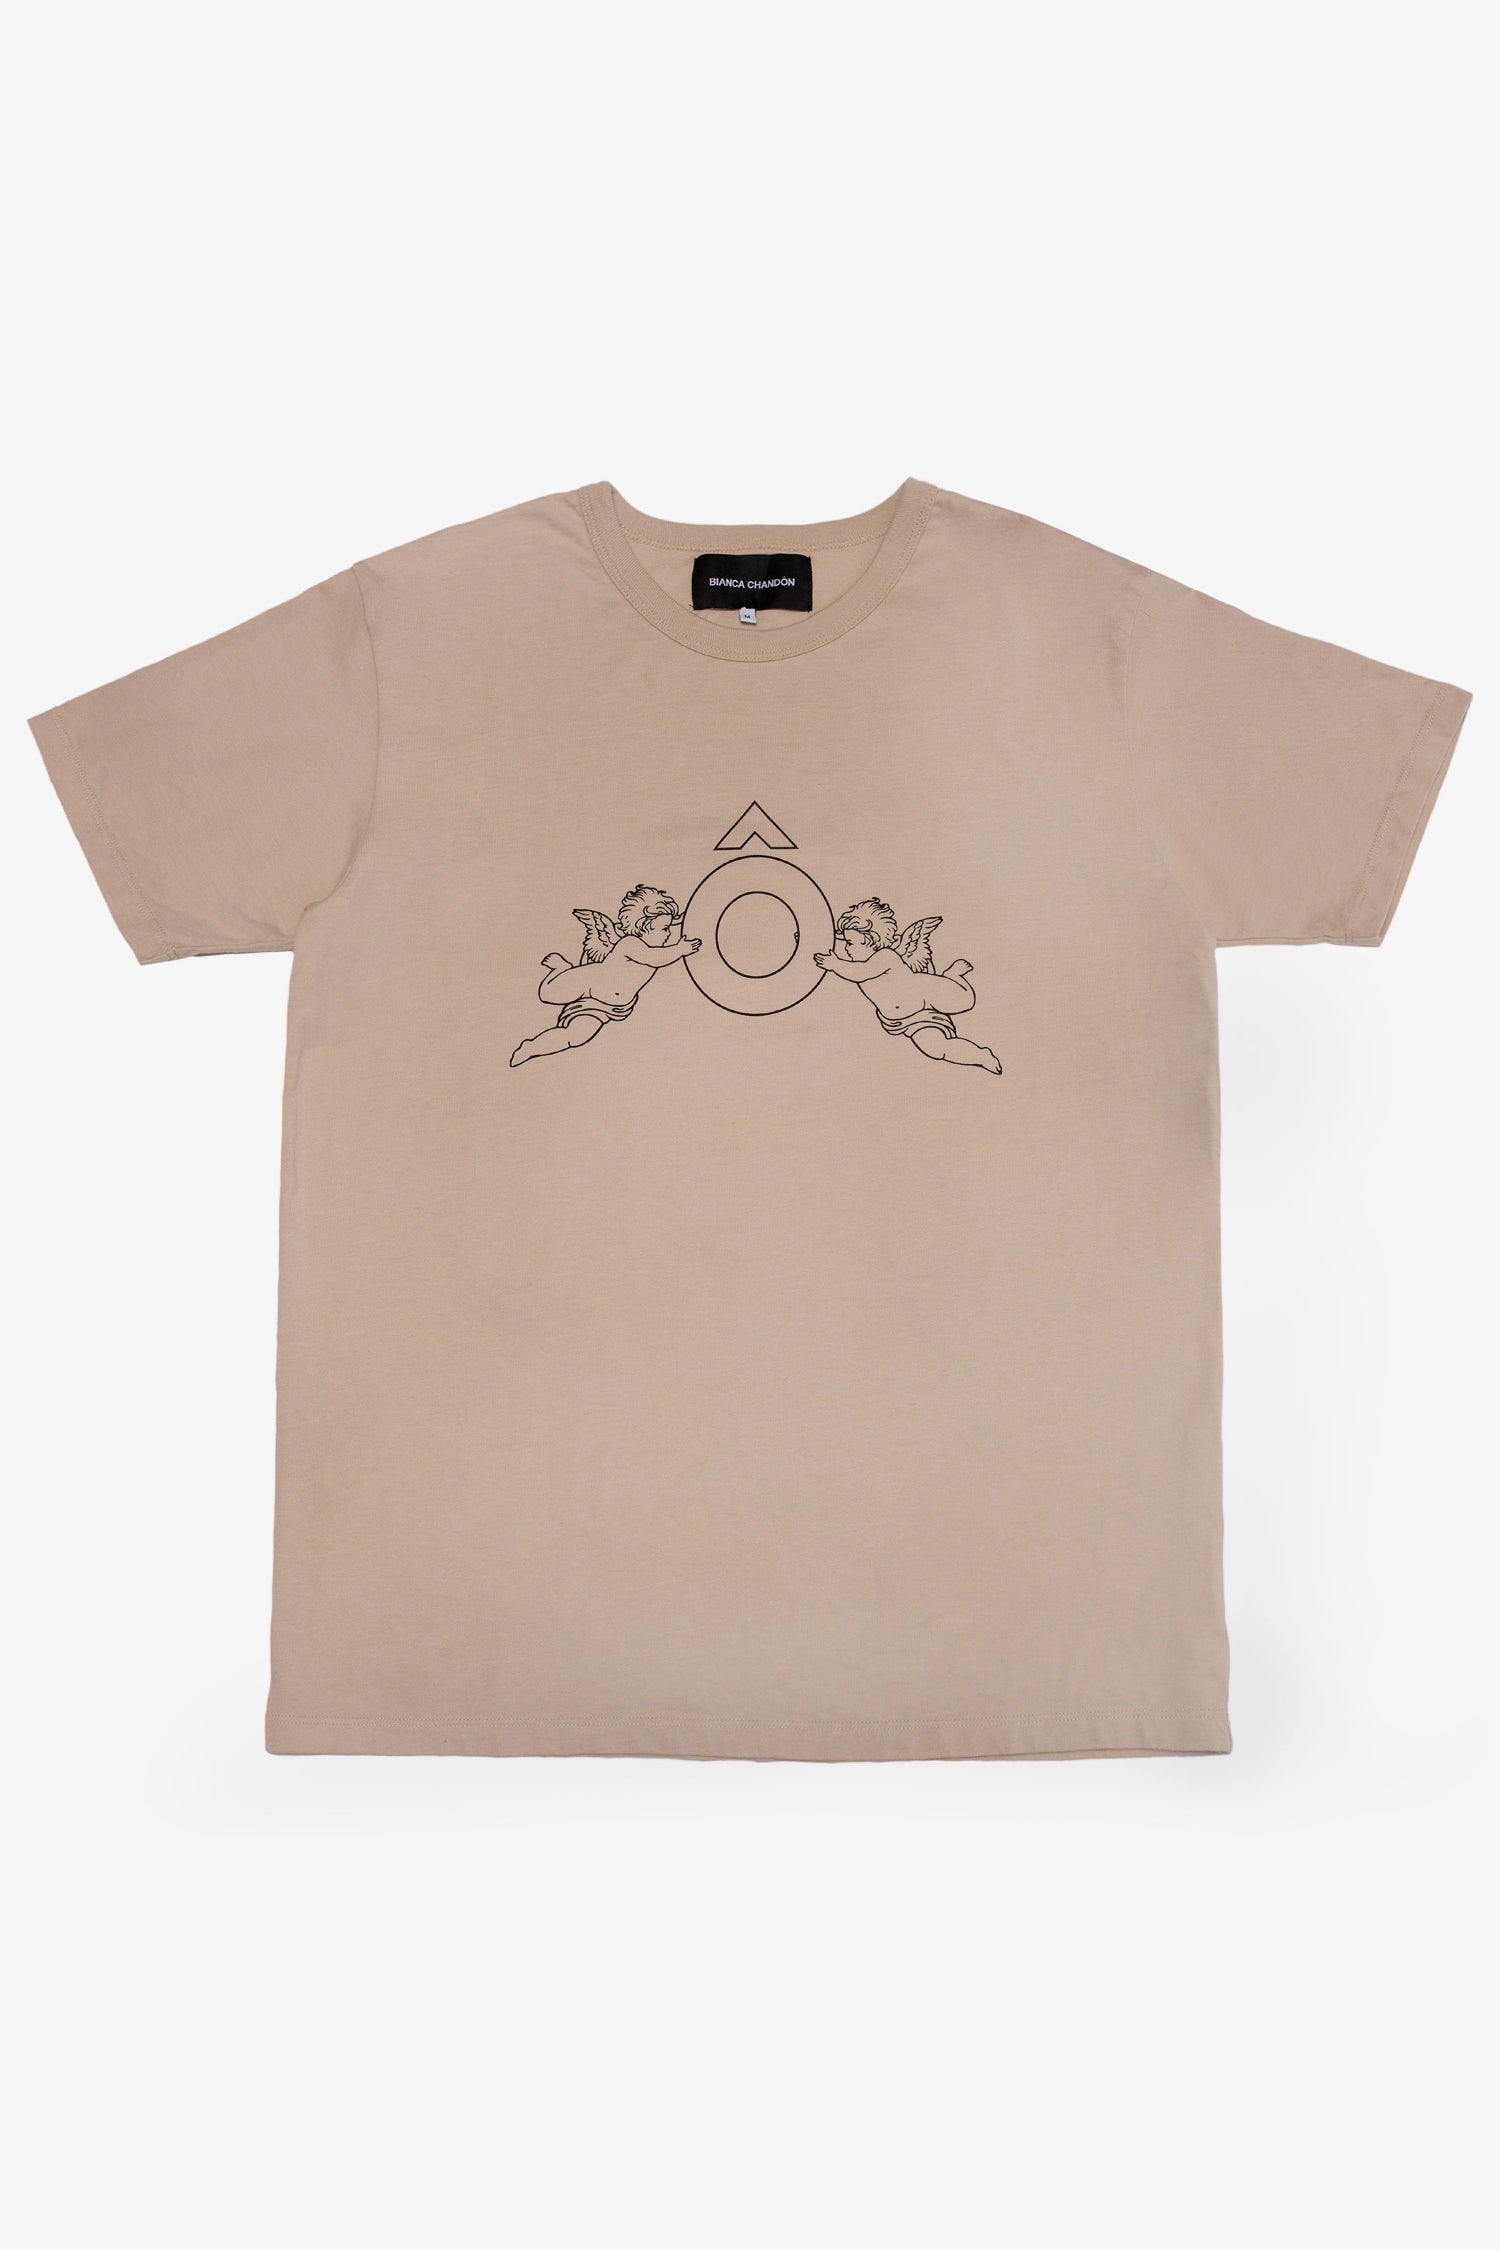 Selectshop FRAME - BIANCA CHANDON Angel Eyes T-Shirt T-Shirts Dubai